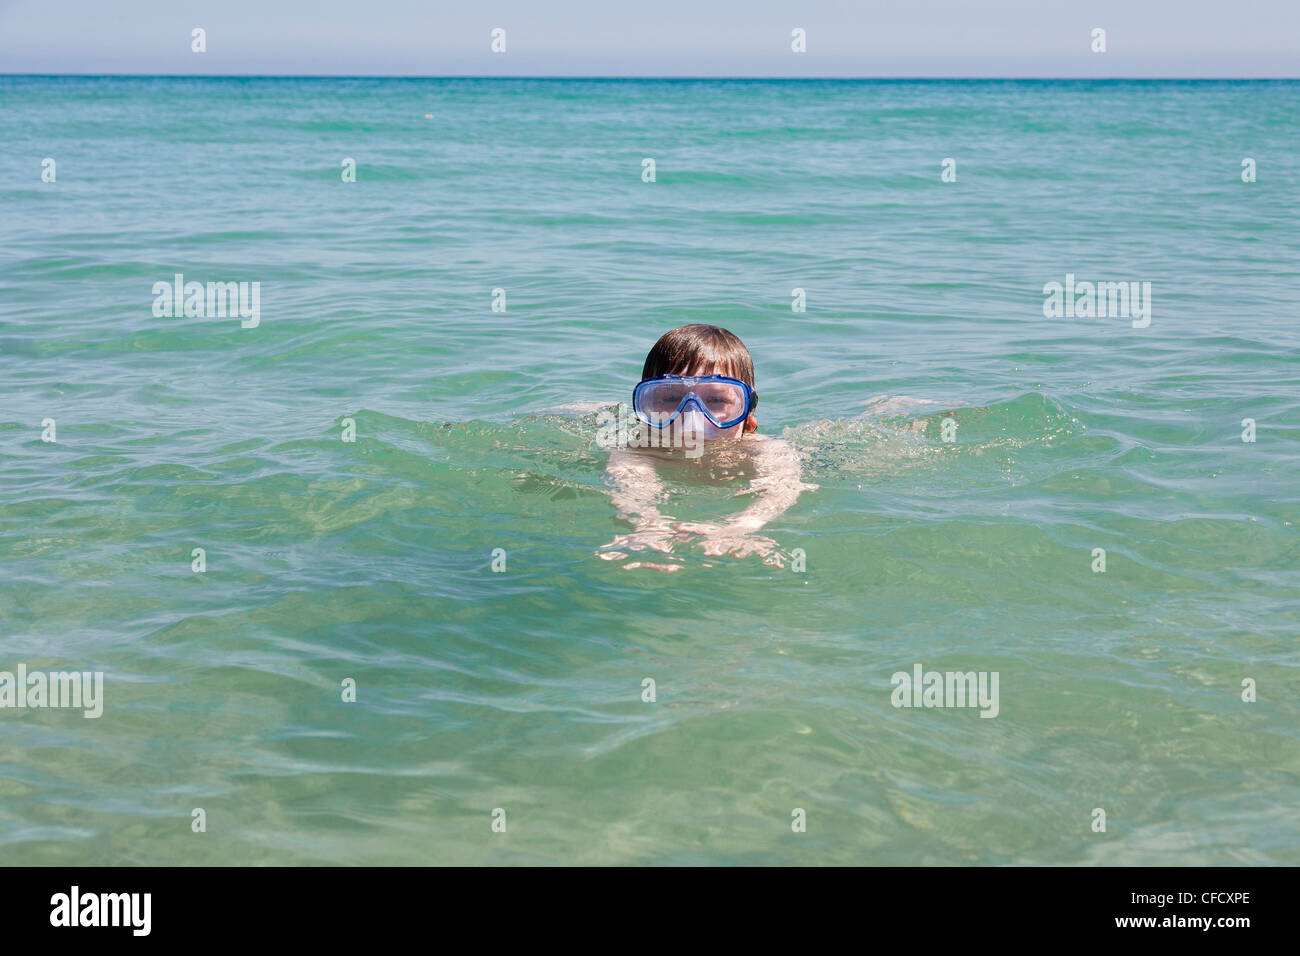 Garçon avec un masque de plongée natation dans l'océan Atlantique, Costa Calma, Fuerteventura, Îles Canaries, Espagne Banque D'Images